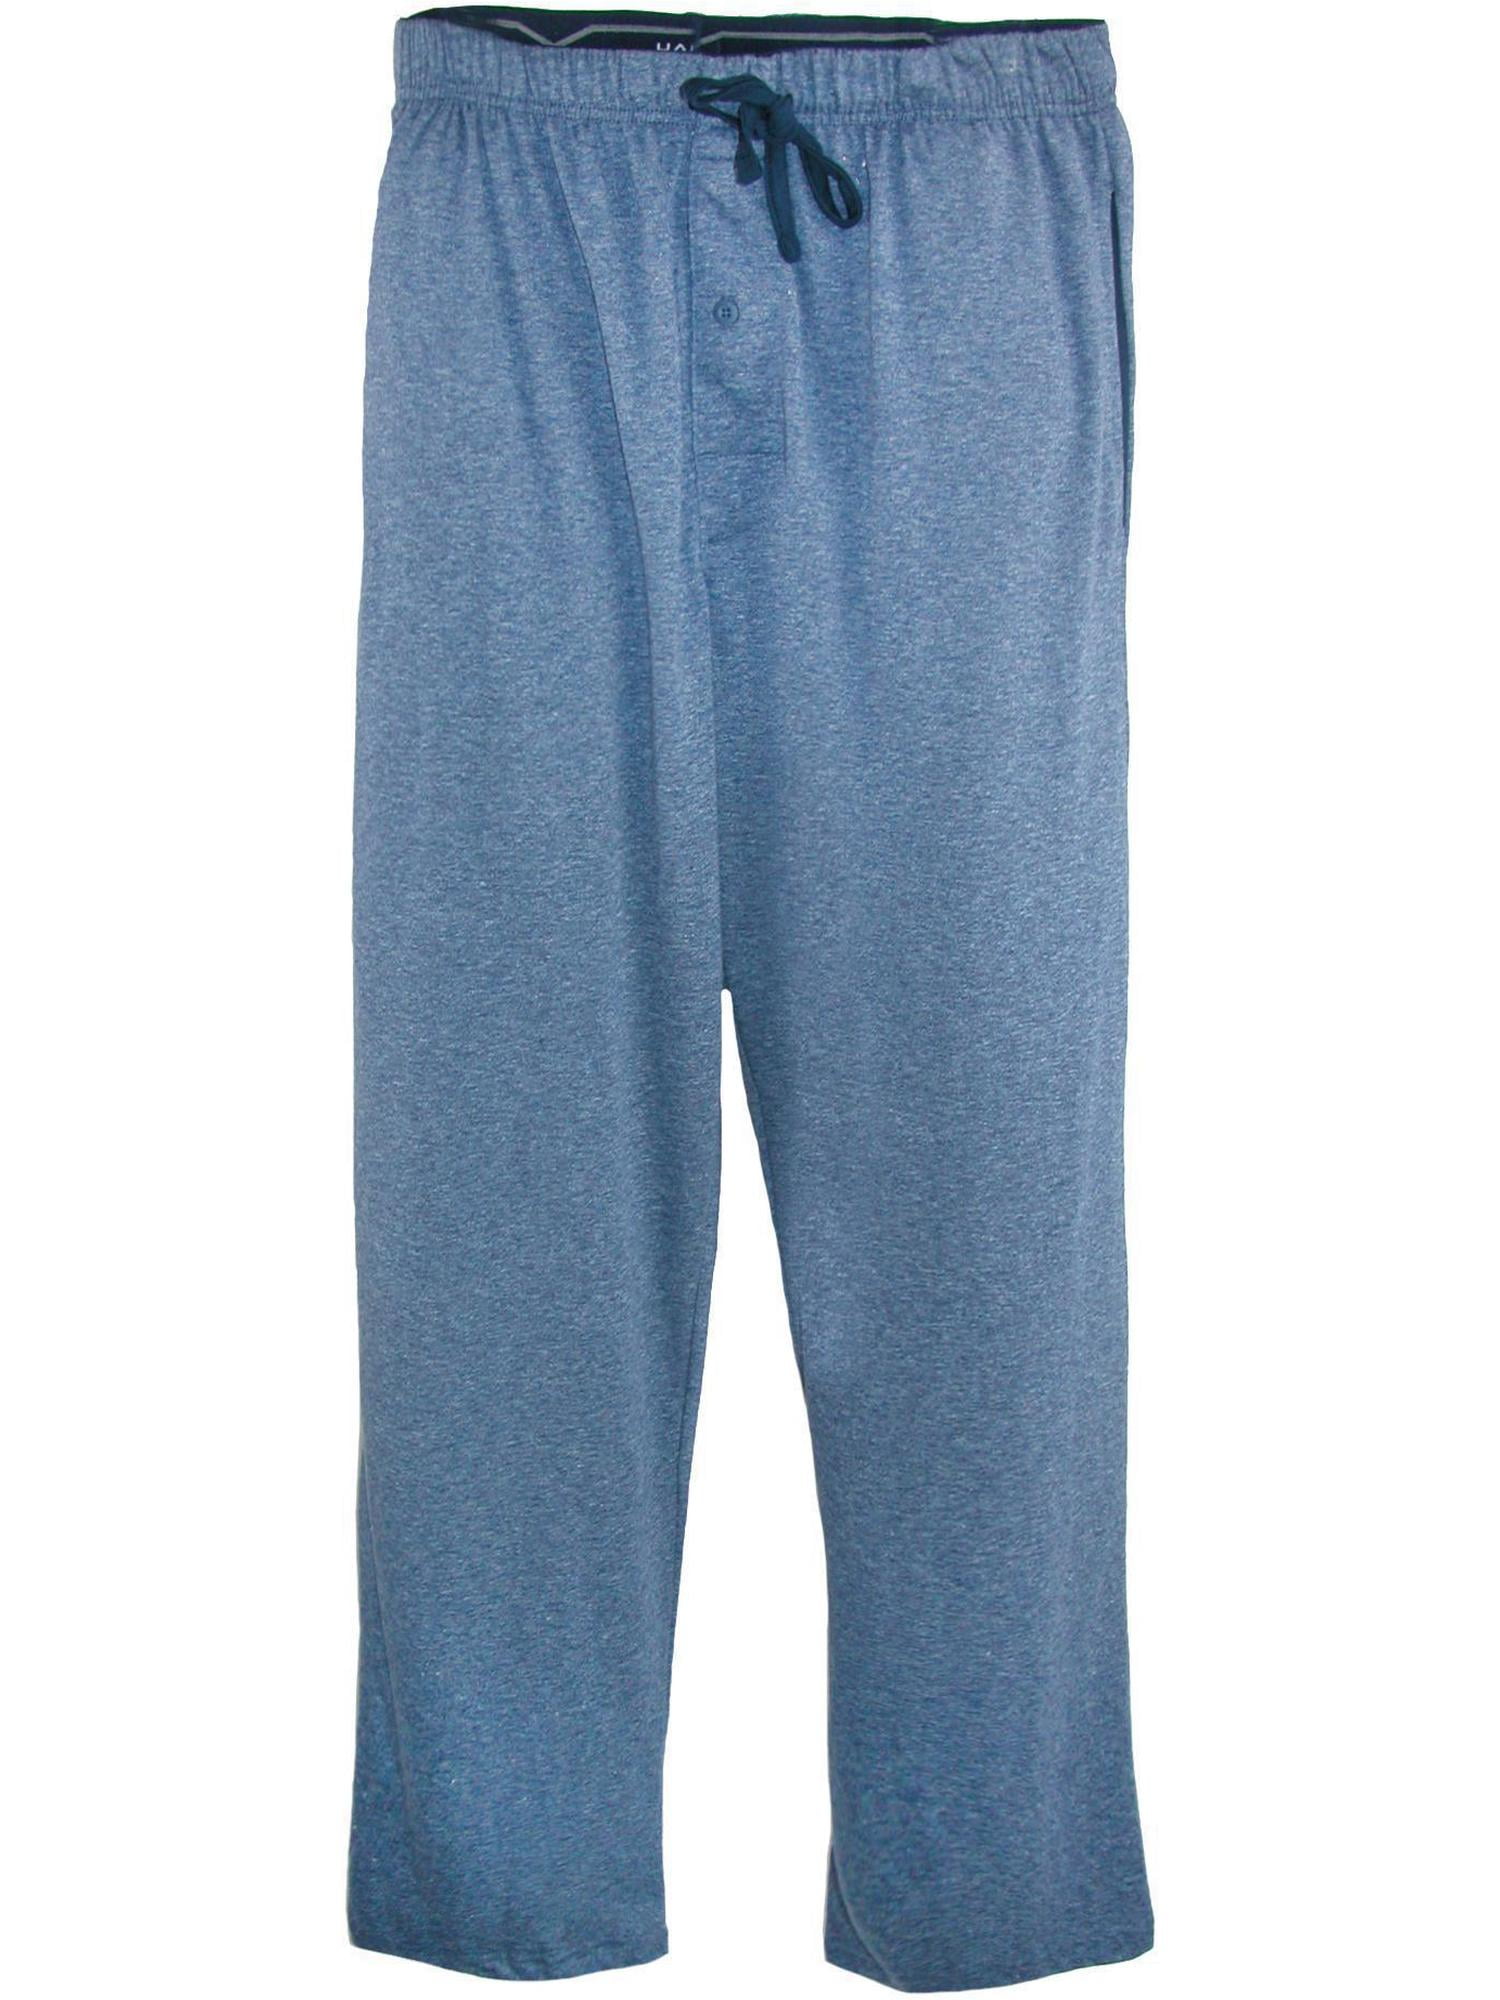 Hanes X Temp Knit Lounge Pajama Pants (Men) - Walmart.com